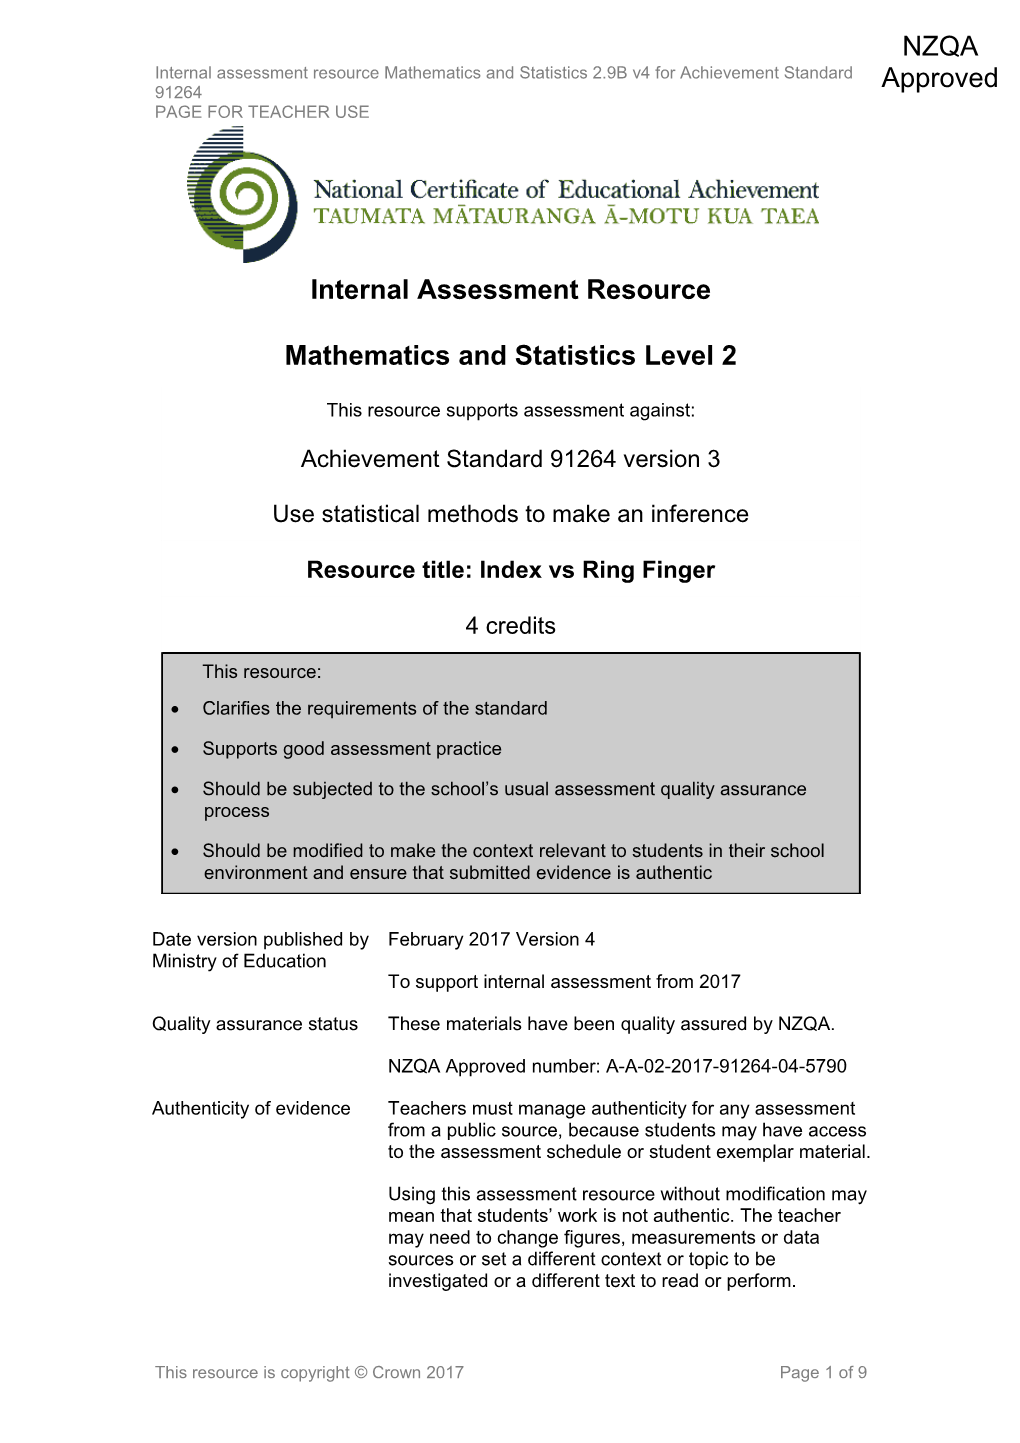 Level 2 Mathematics and Statistics Internal Assessment Resources